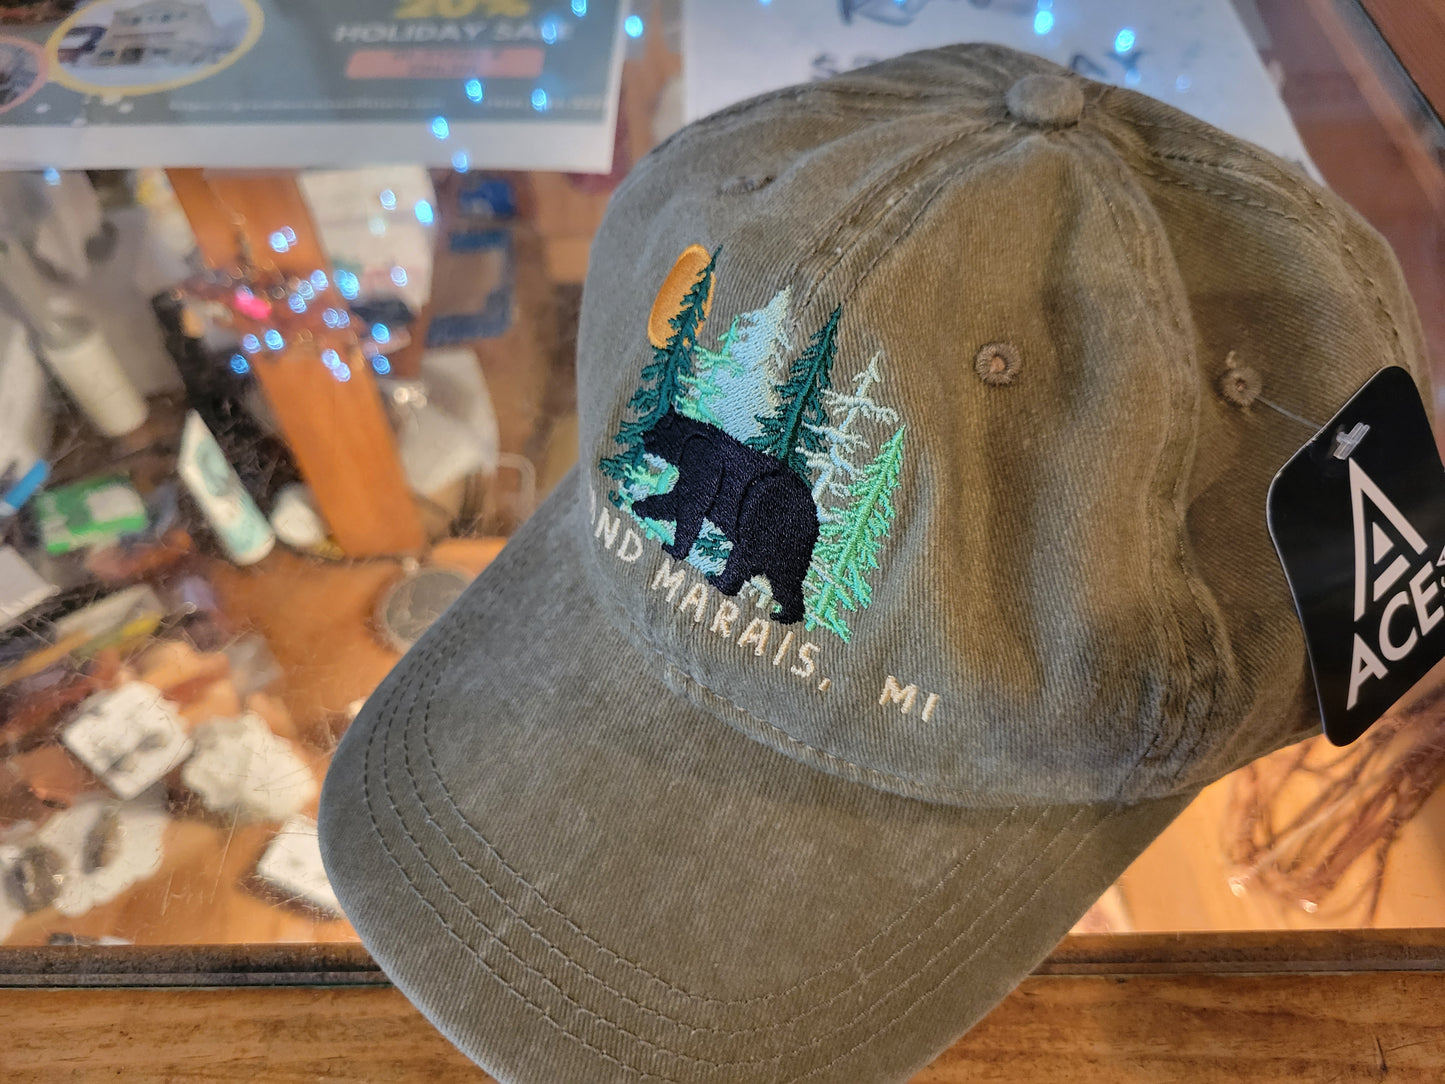 Baseball cap with bear and trees